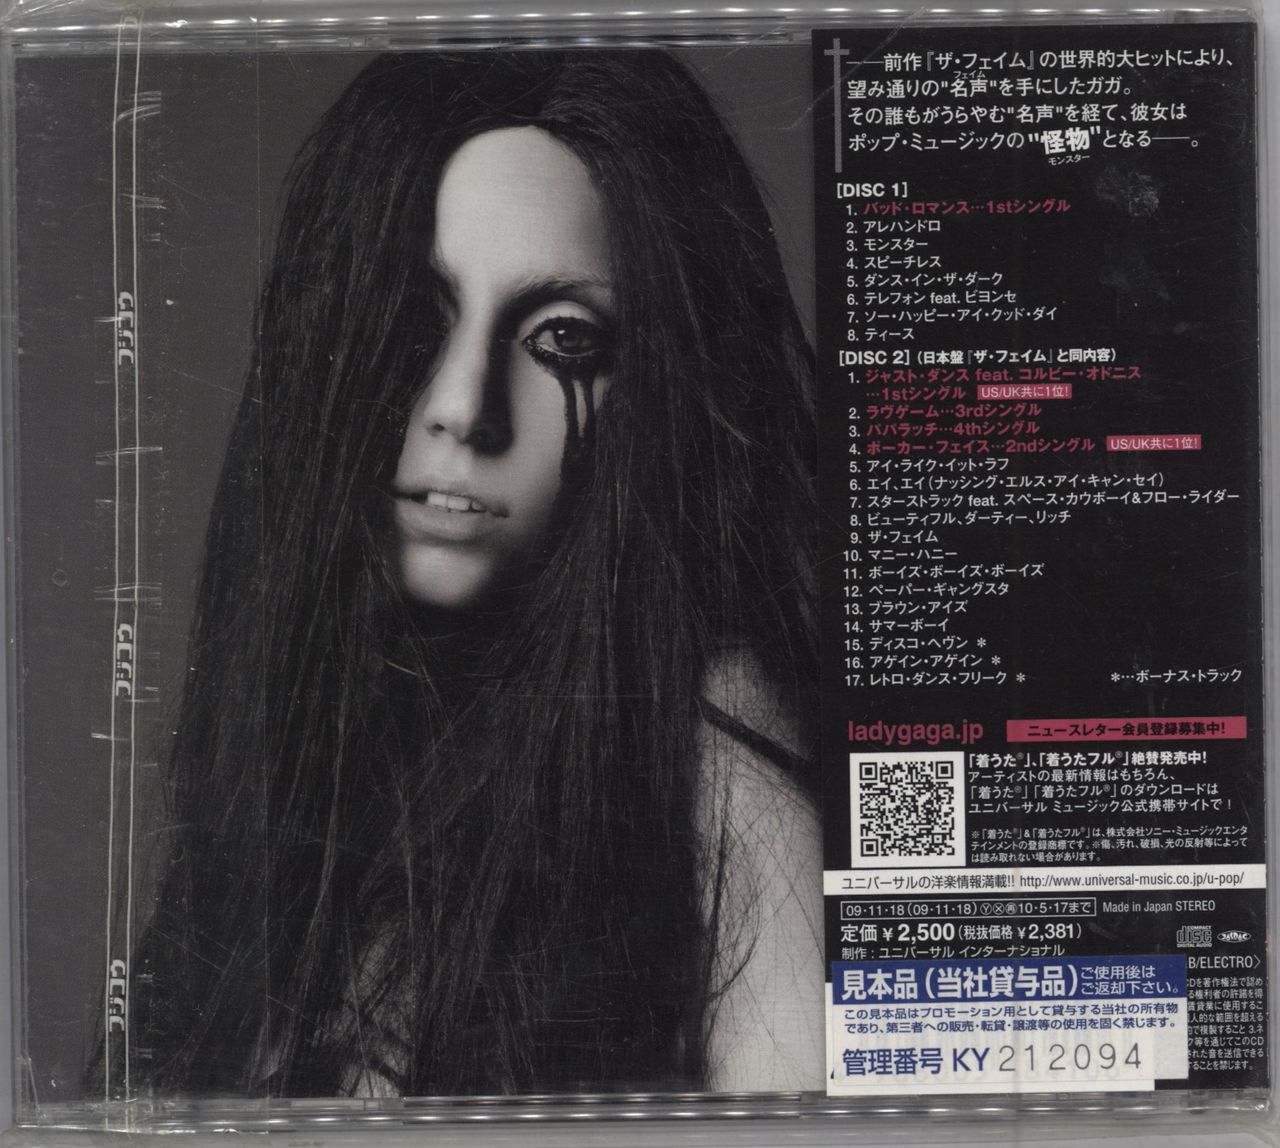 Lady Gaga The Fame Monster Japanese Promo 2 CD album set (Double CD) LGQ2CTH784669